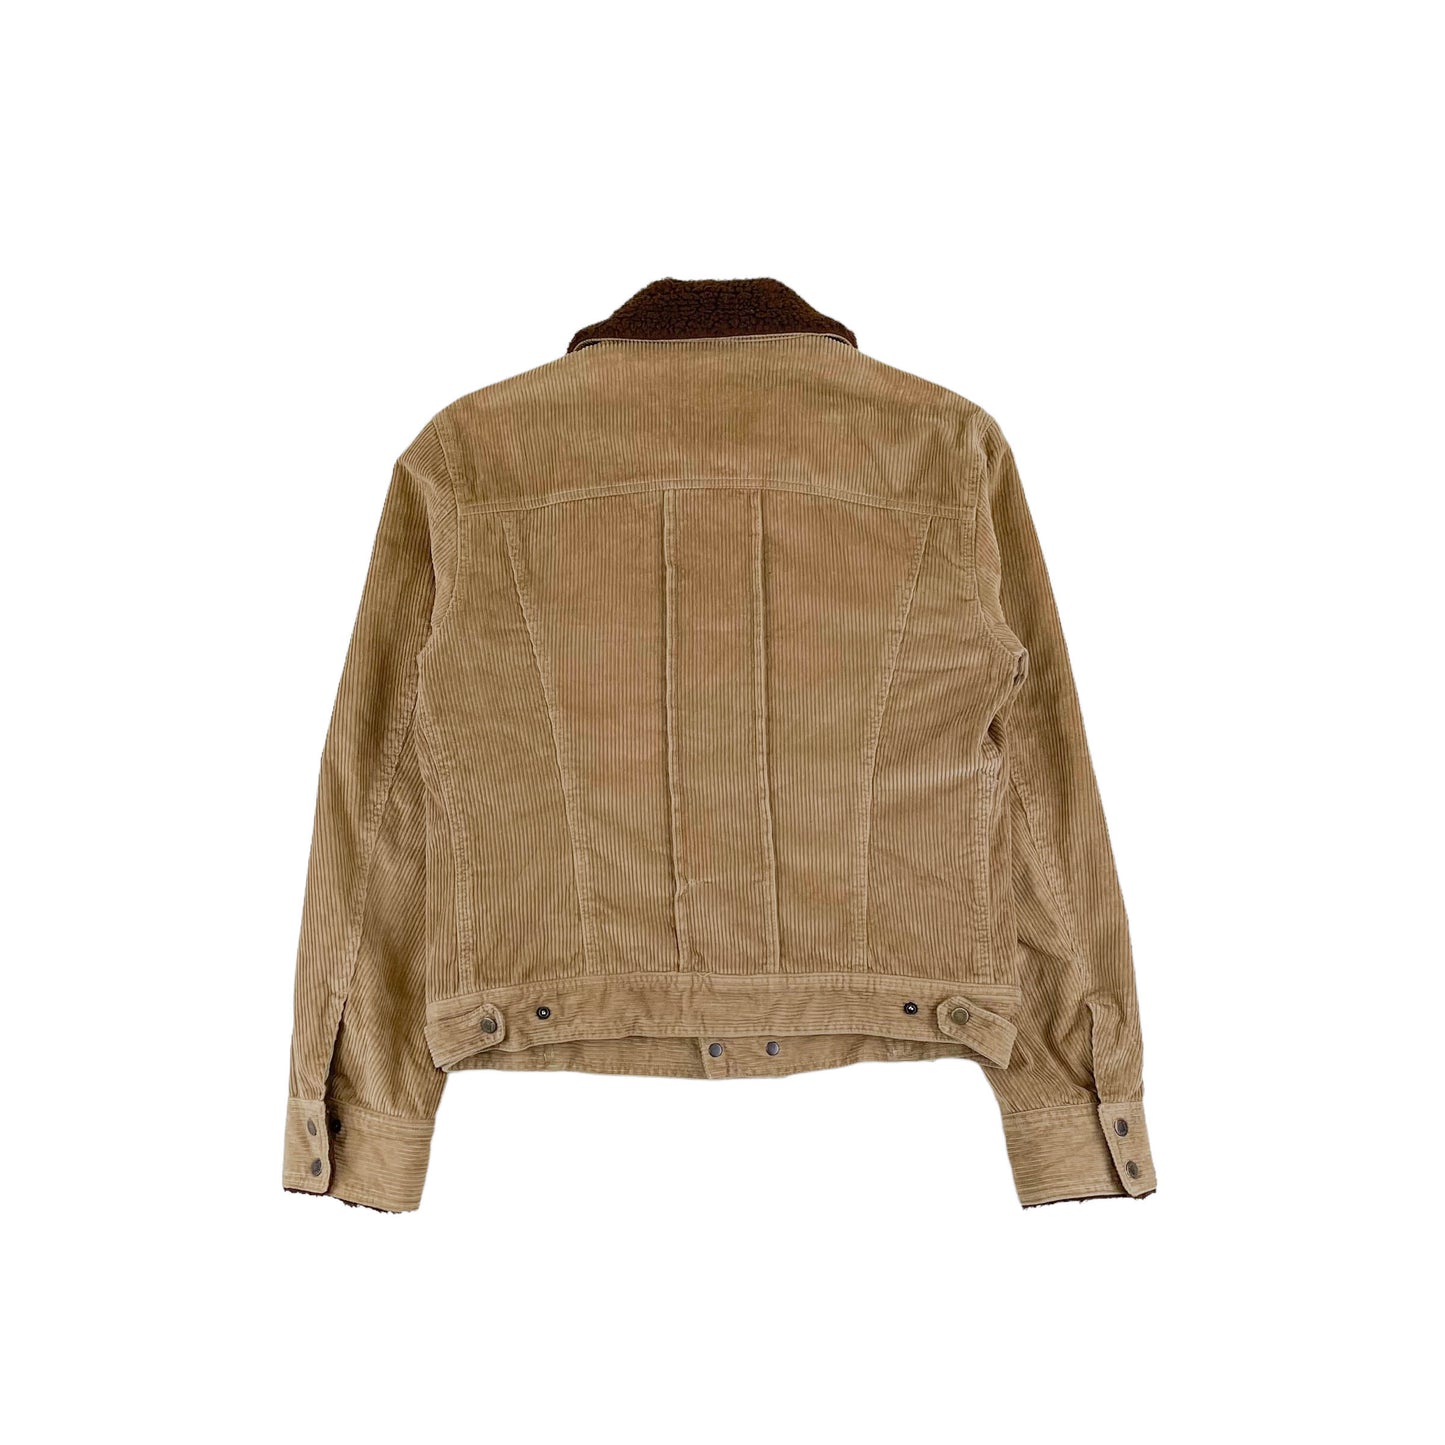 Vintage D&G Corduroy Jacket (L)